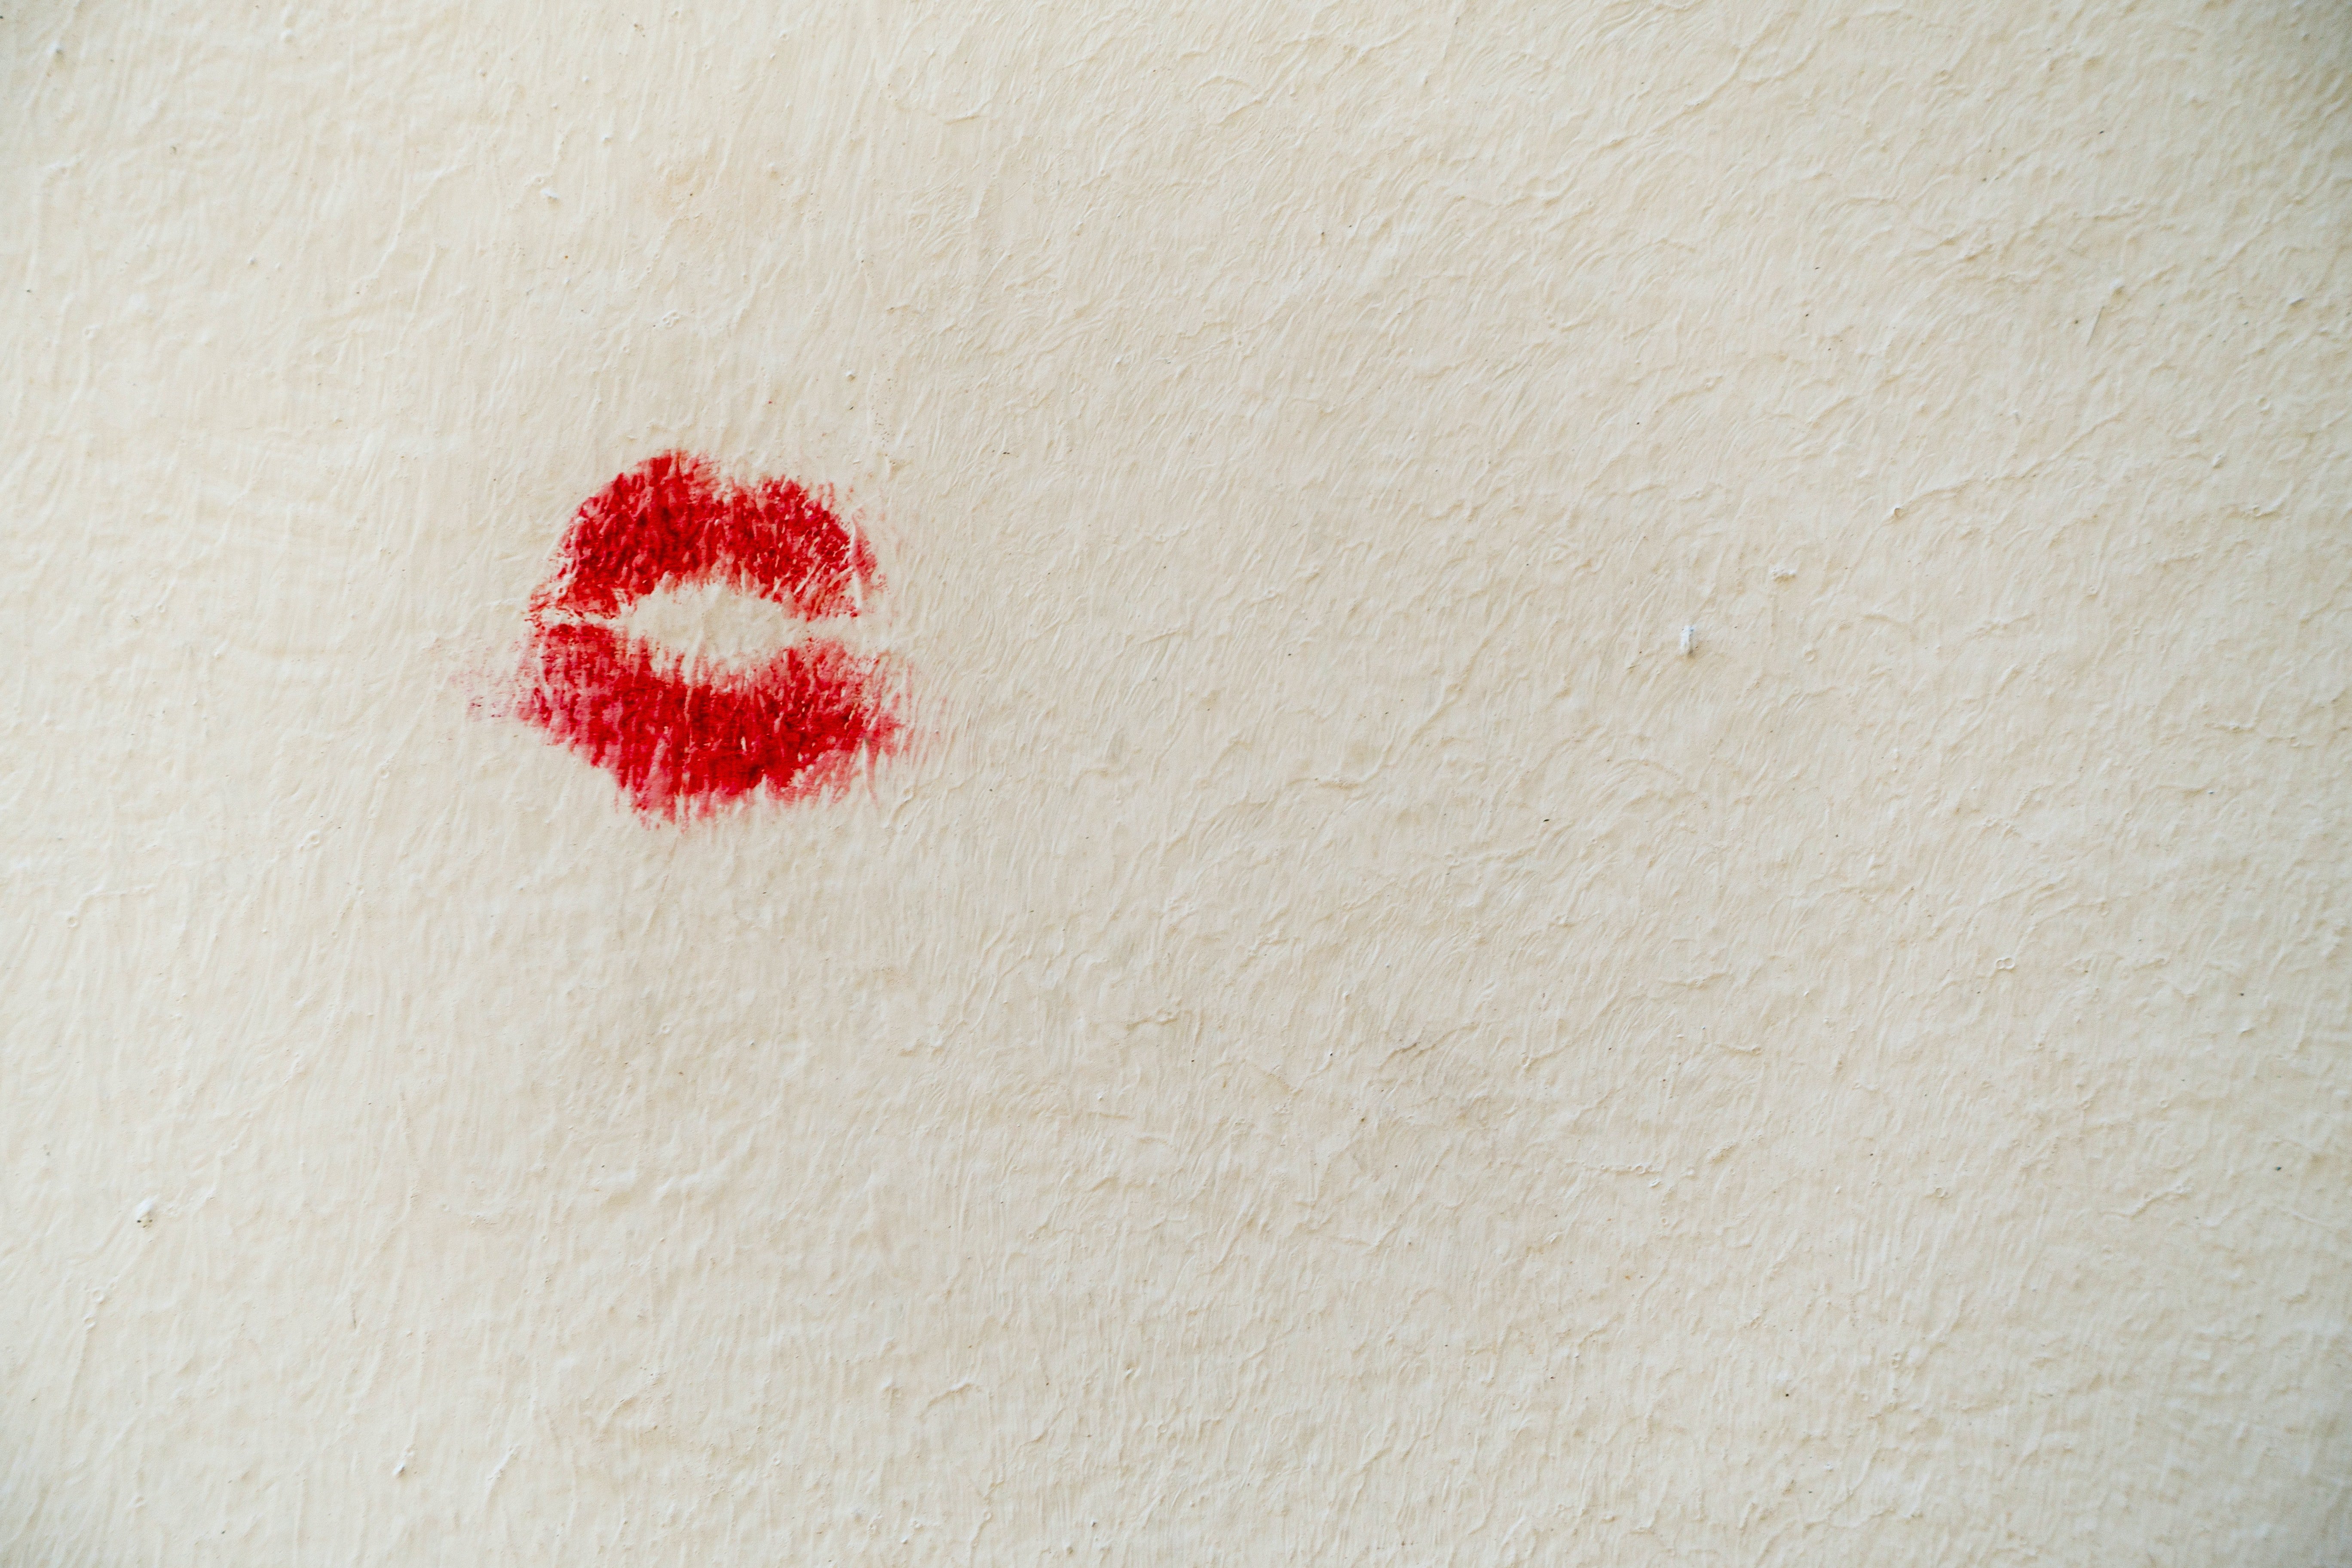 Red lipstick | Shutterstock